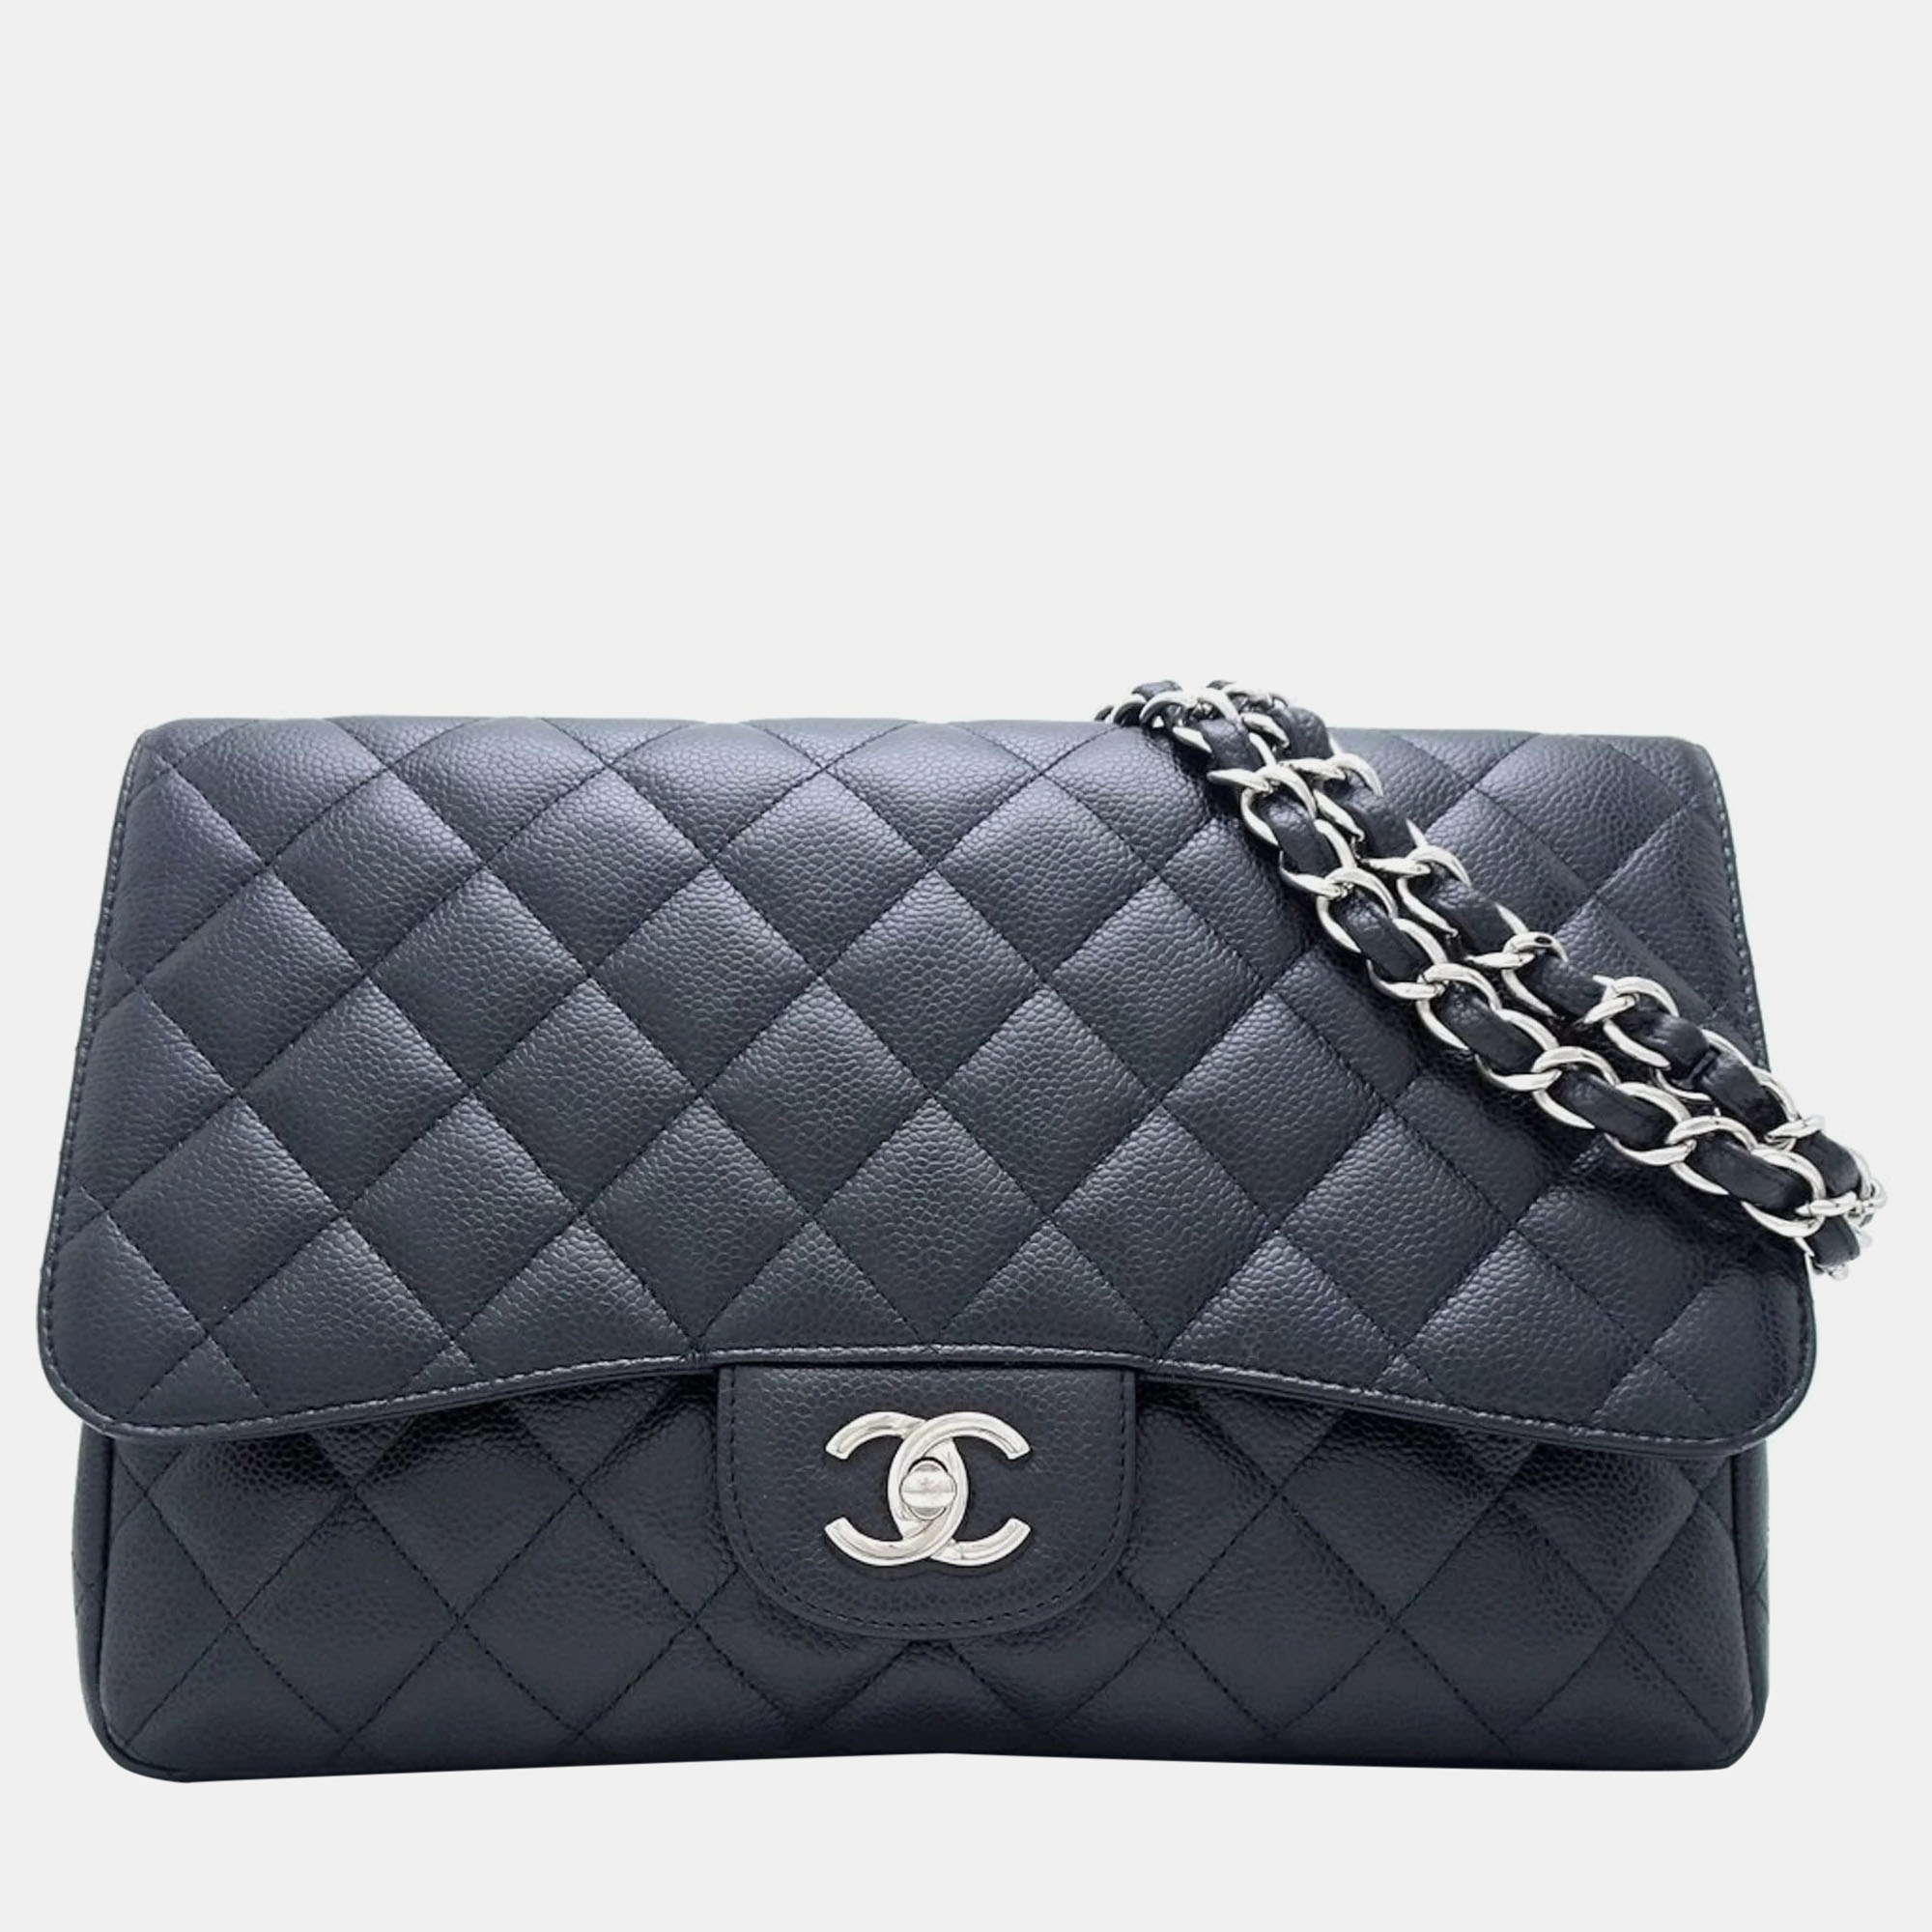 Chanel black caviar leather large classic single flap shoulder bags